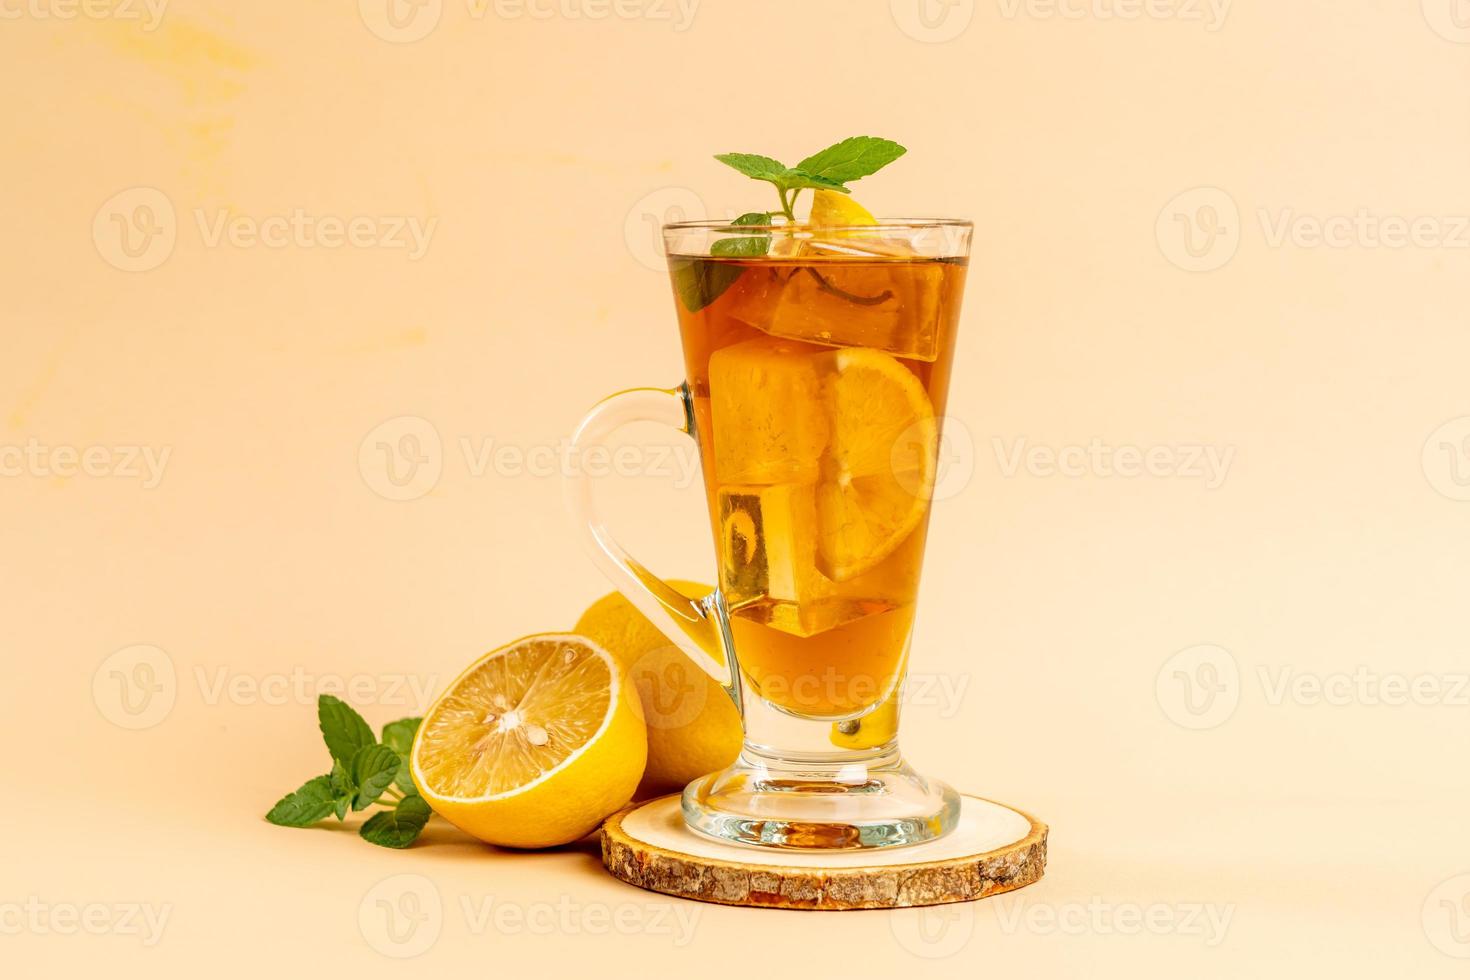 bicchiere di tè freddo al limone foto